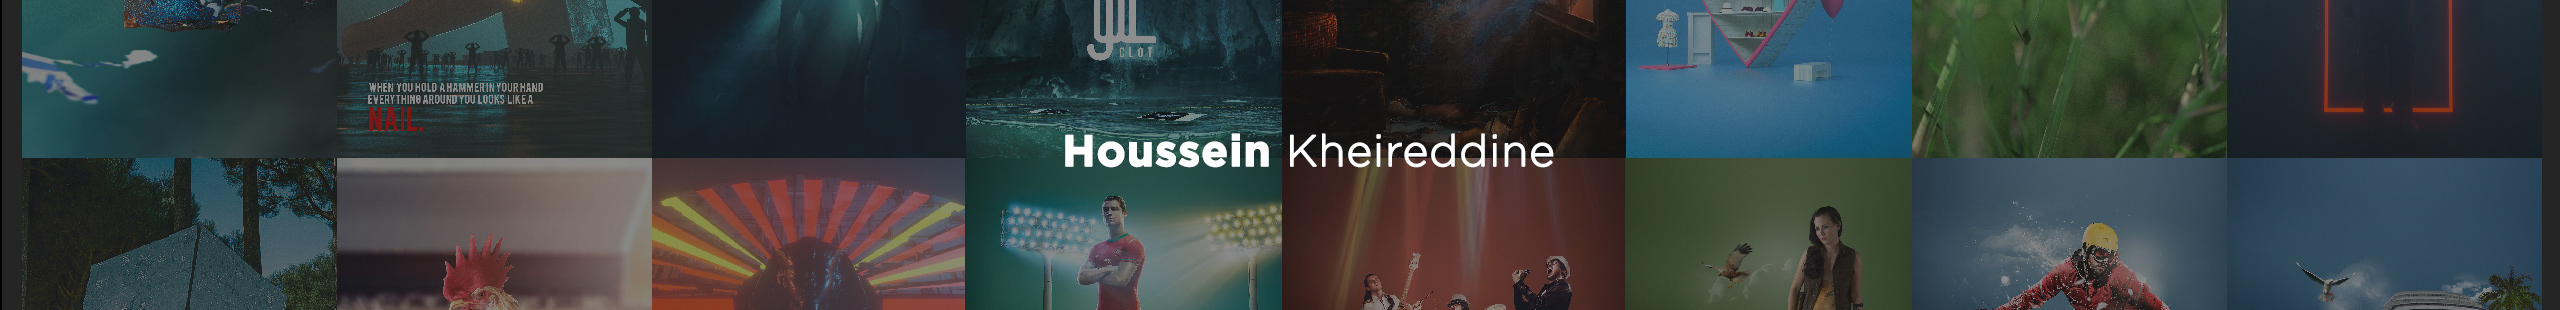 Hussein Kheireddeen's profile banner